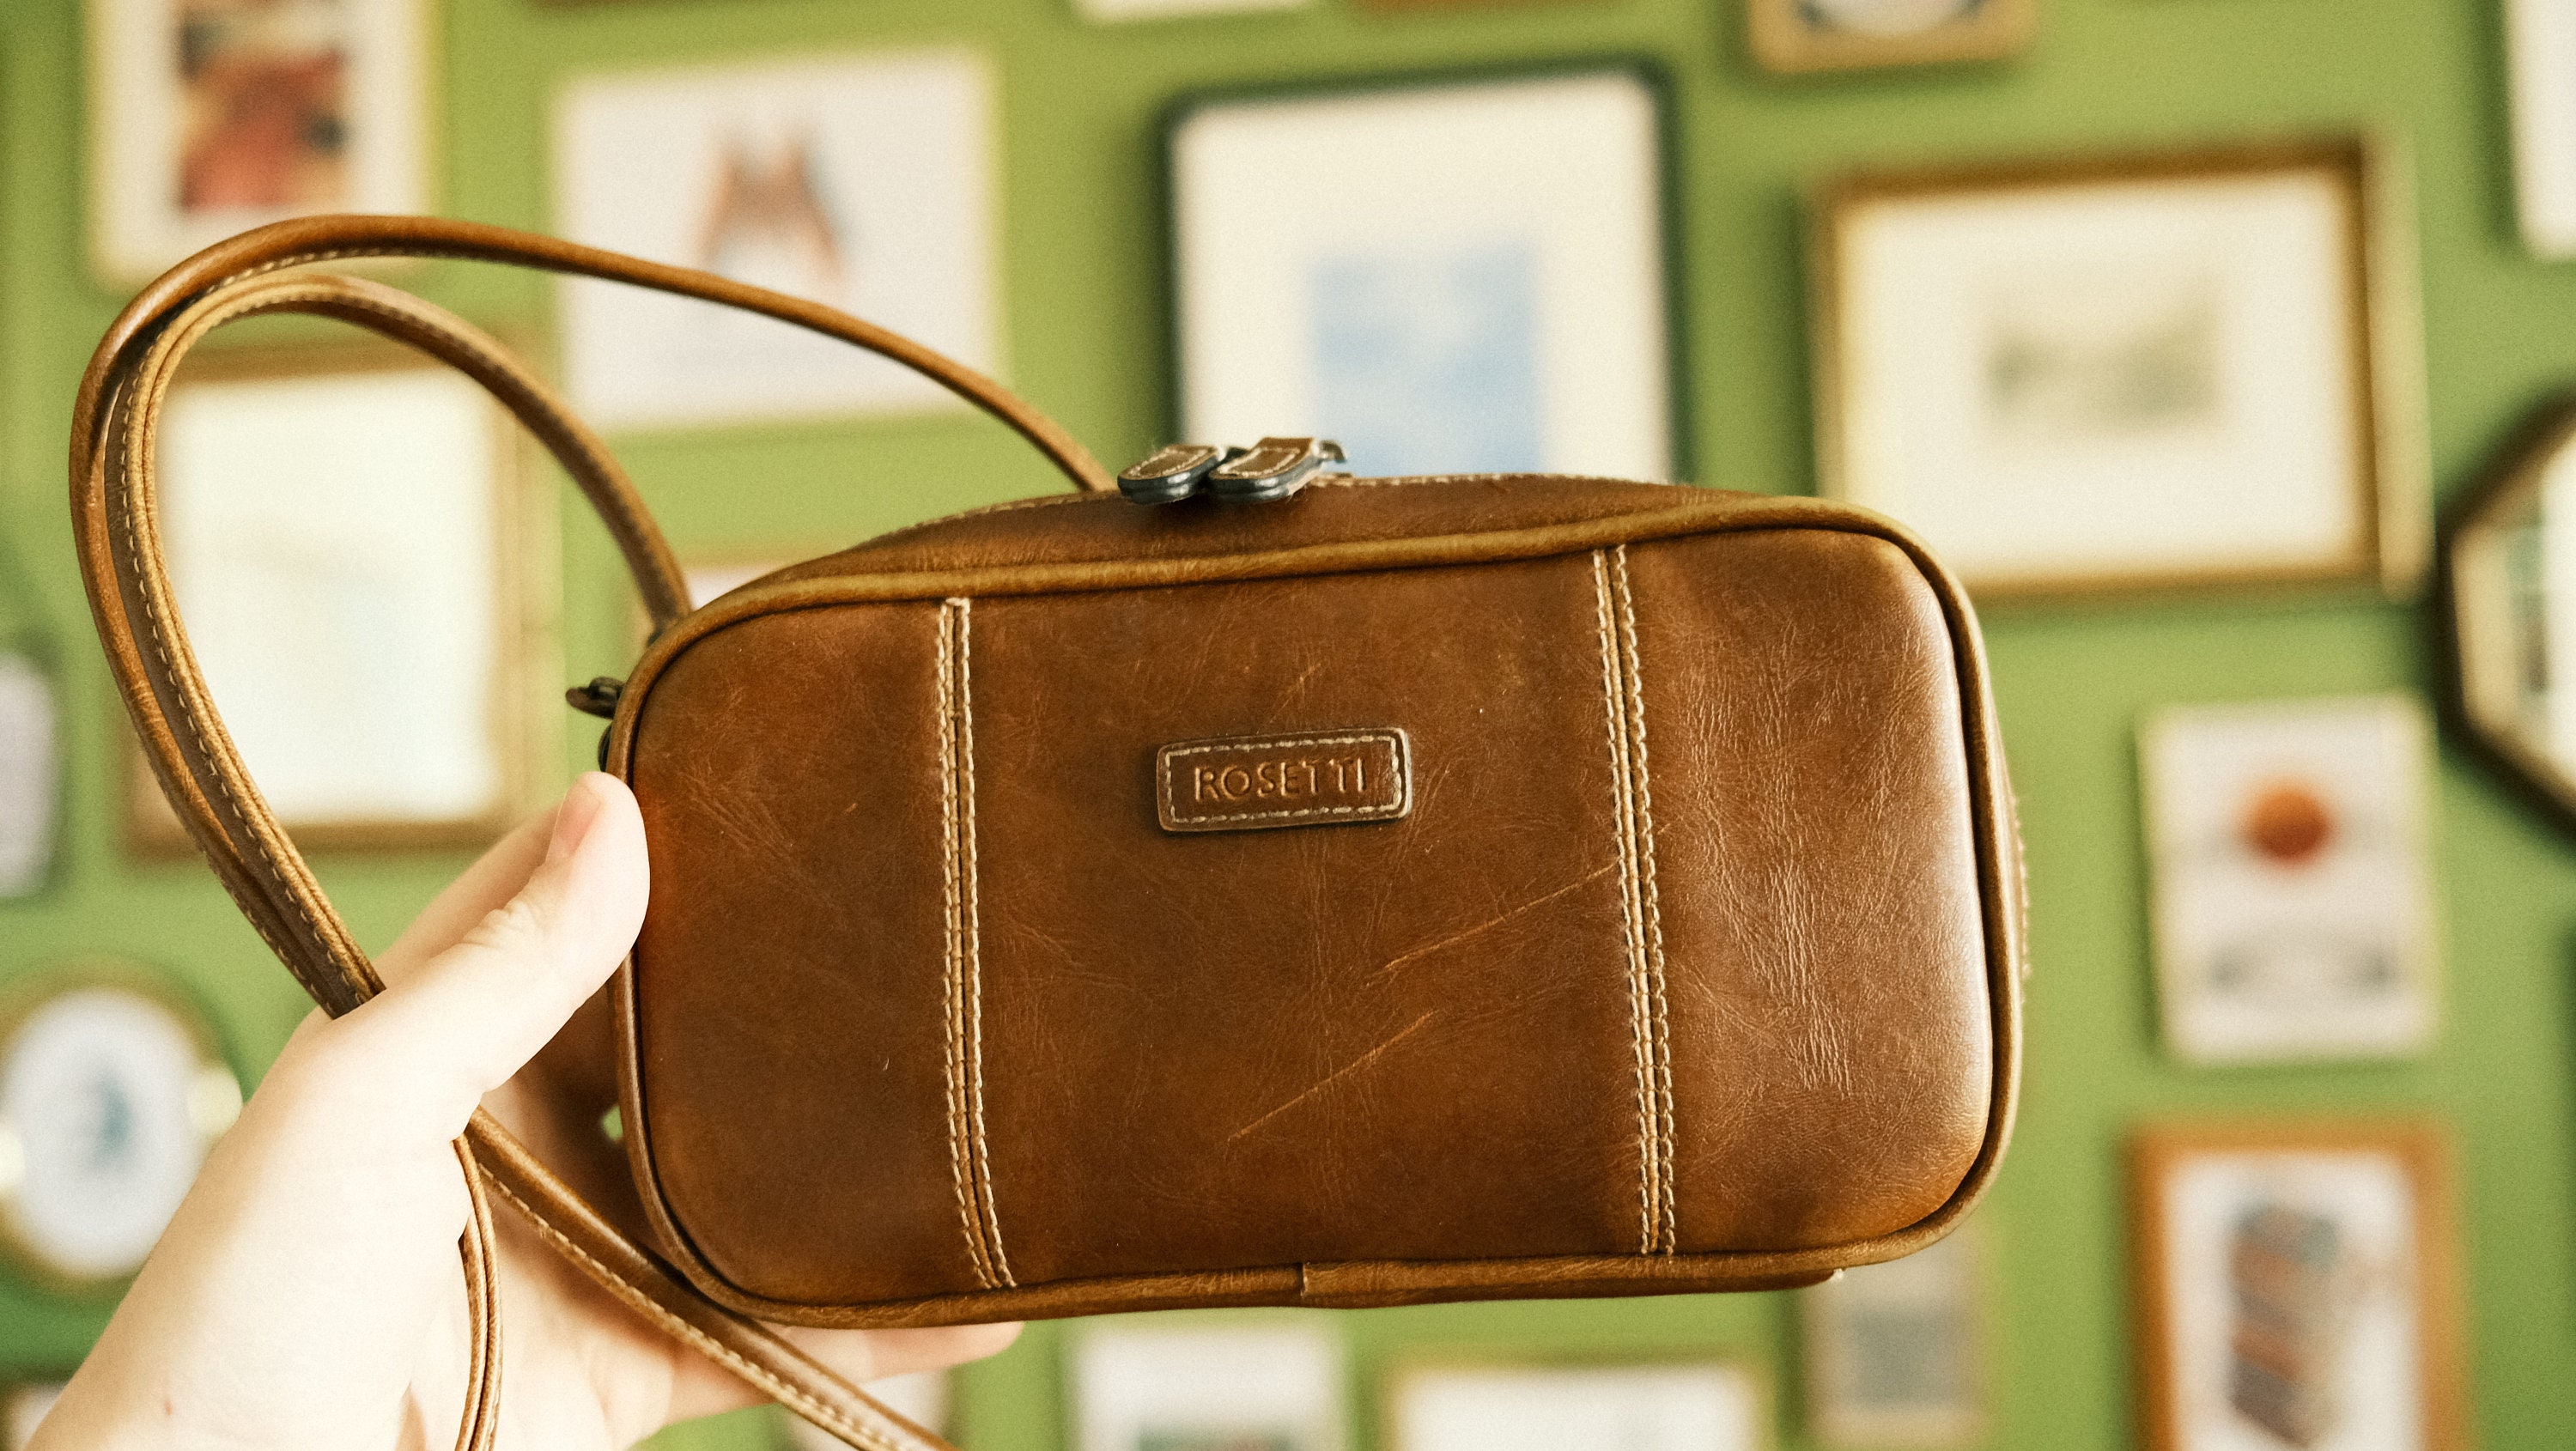 Rosetti Beige Tan Brown Small Shoulder Bag Handbag Purse Zipper | eBay